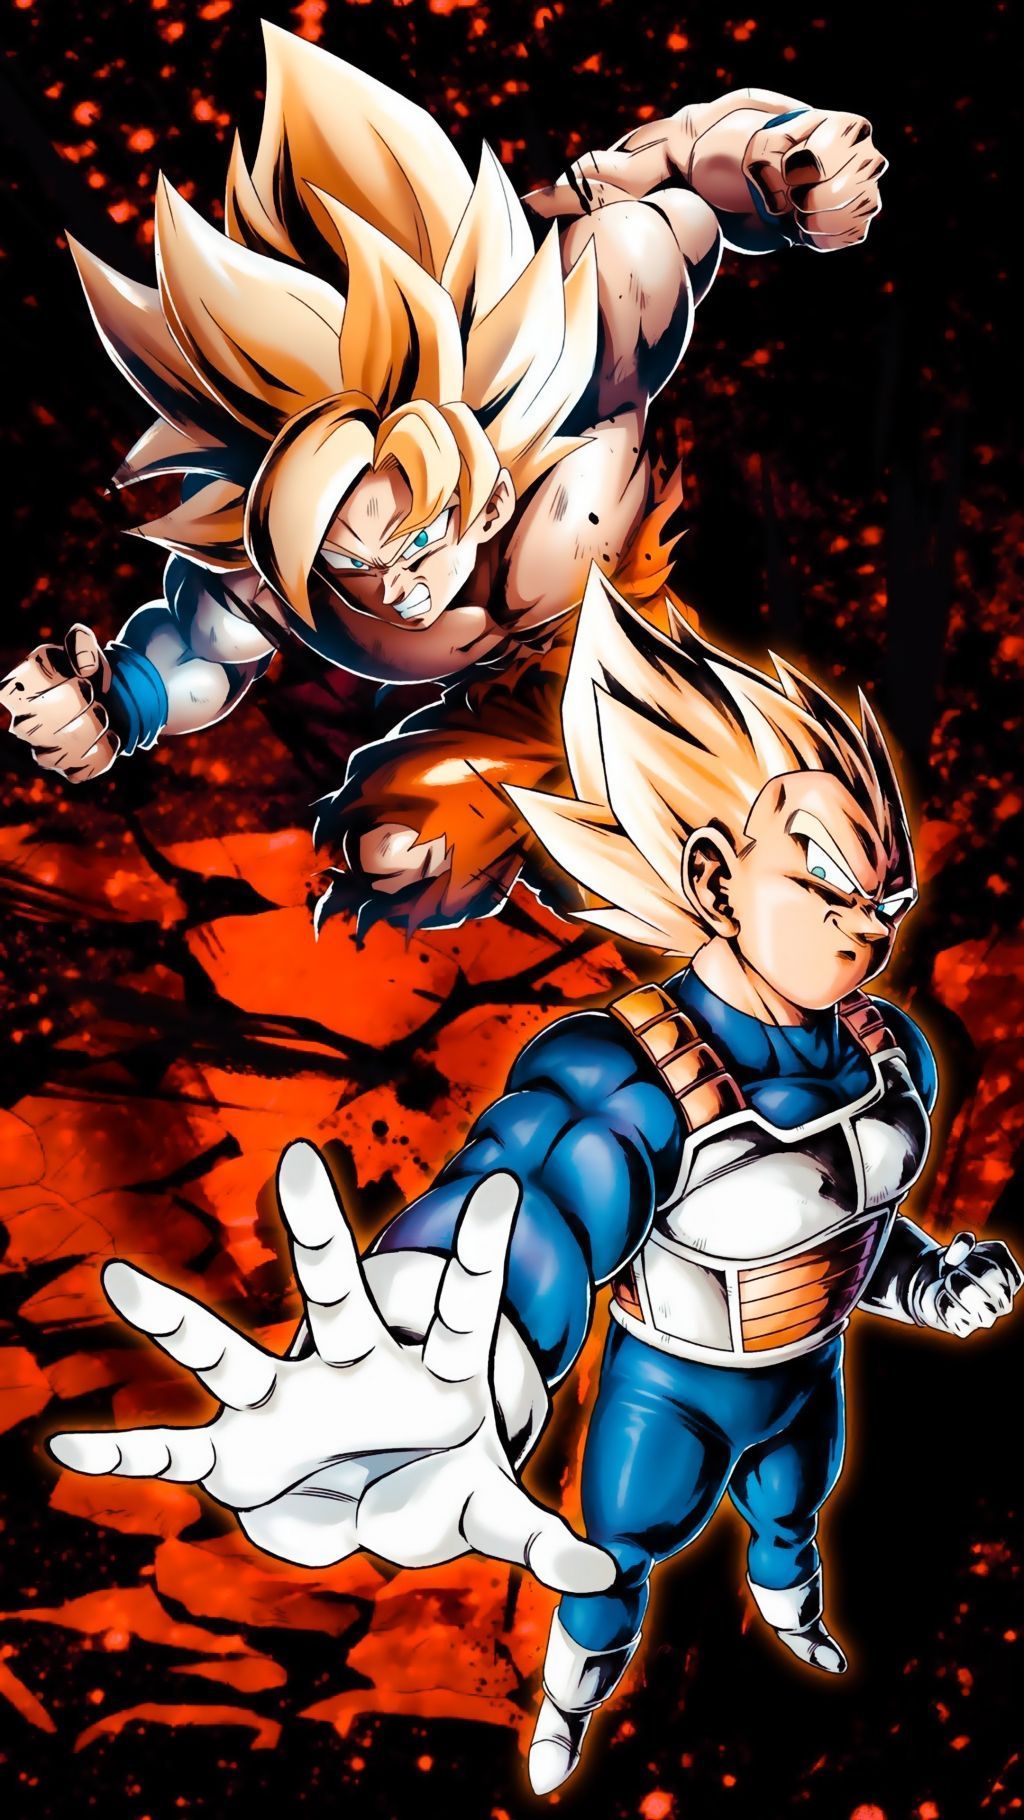 Goku vs Vegeta 4K Wallpaper Free Goku vs Vegeta 4K Background